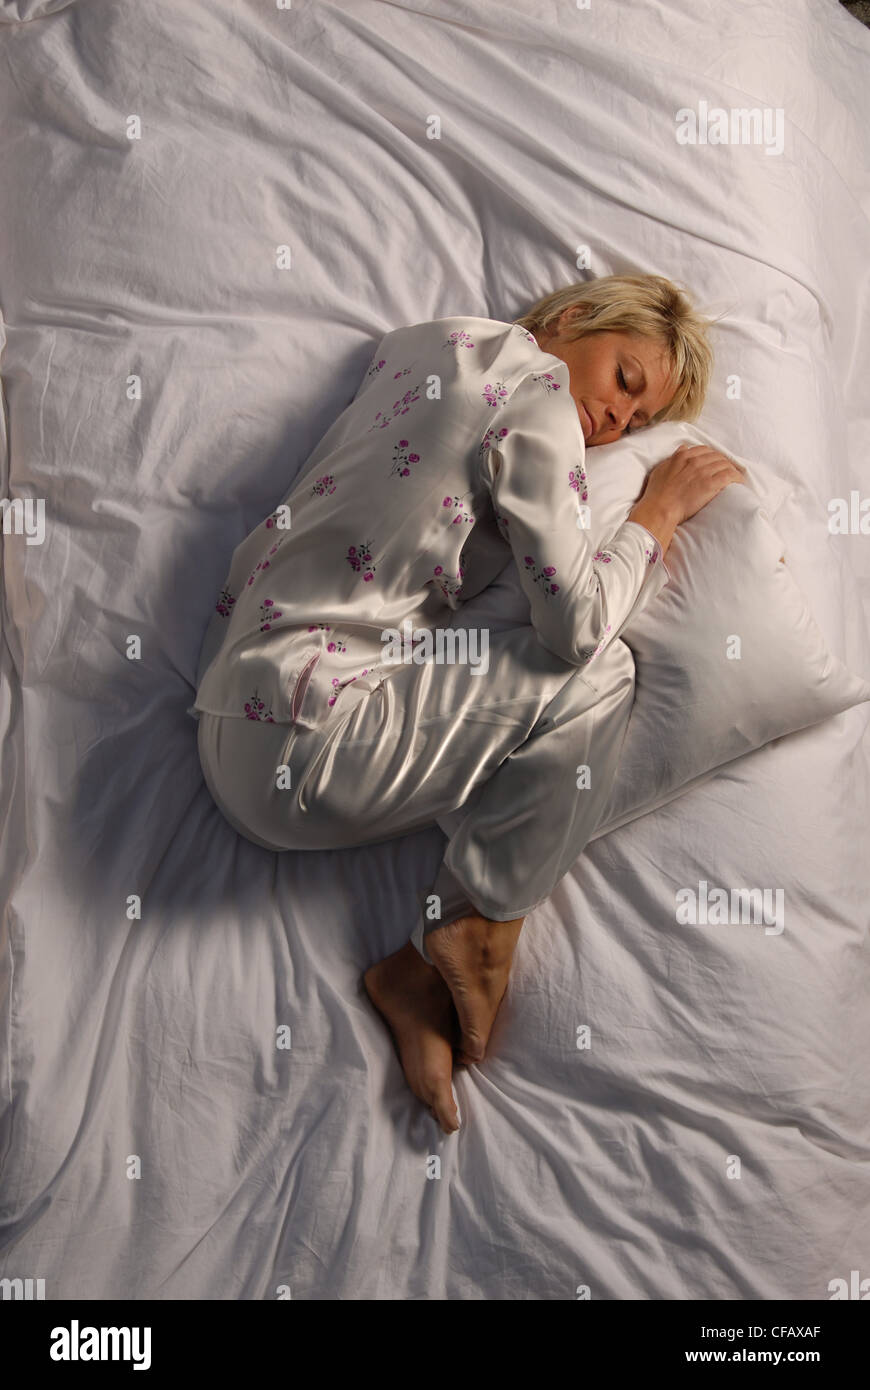 Sleep, sleeping, bedrooms, bed, lie, dreaming, woman, rest Stock Photo